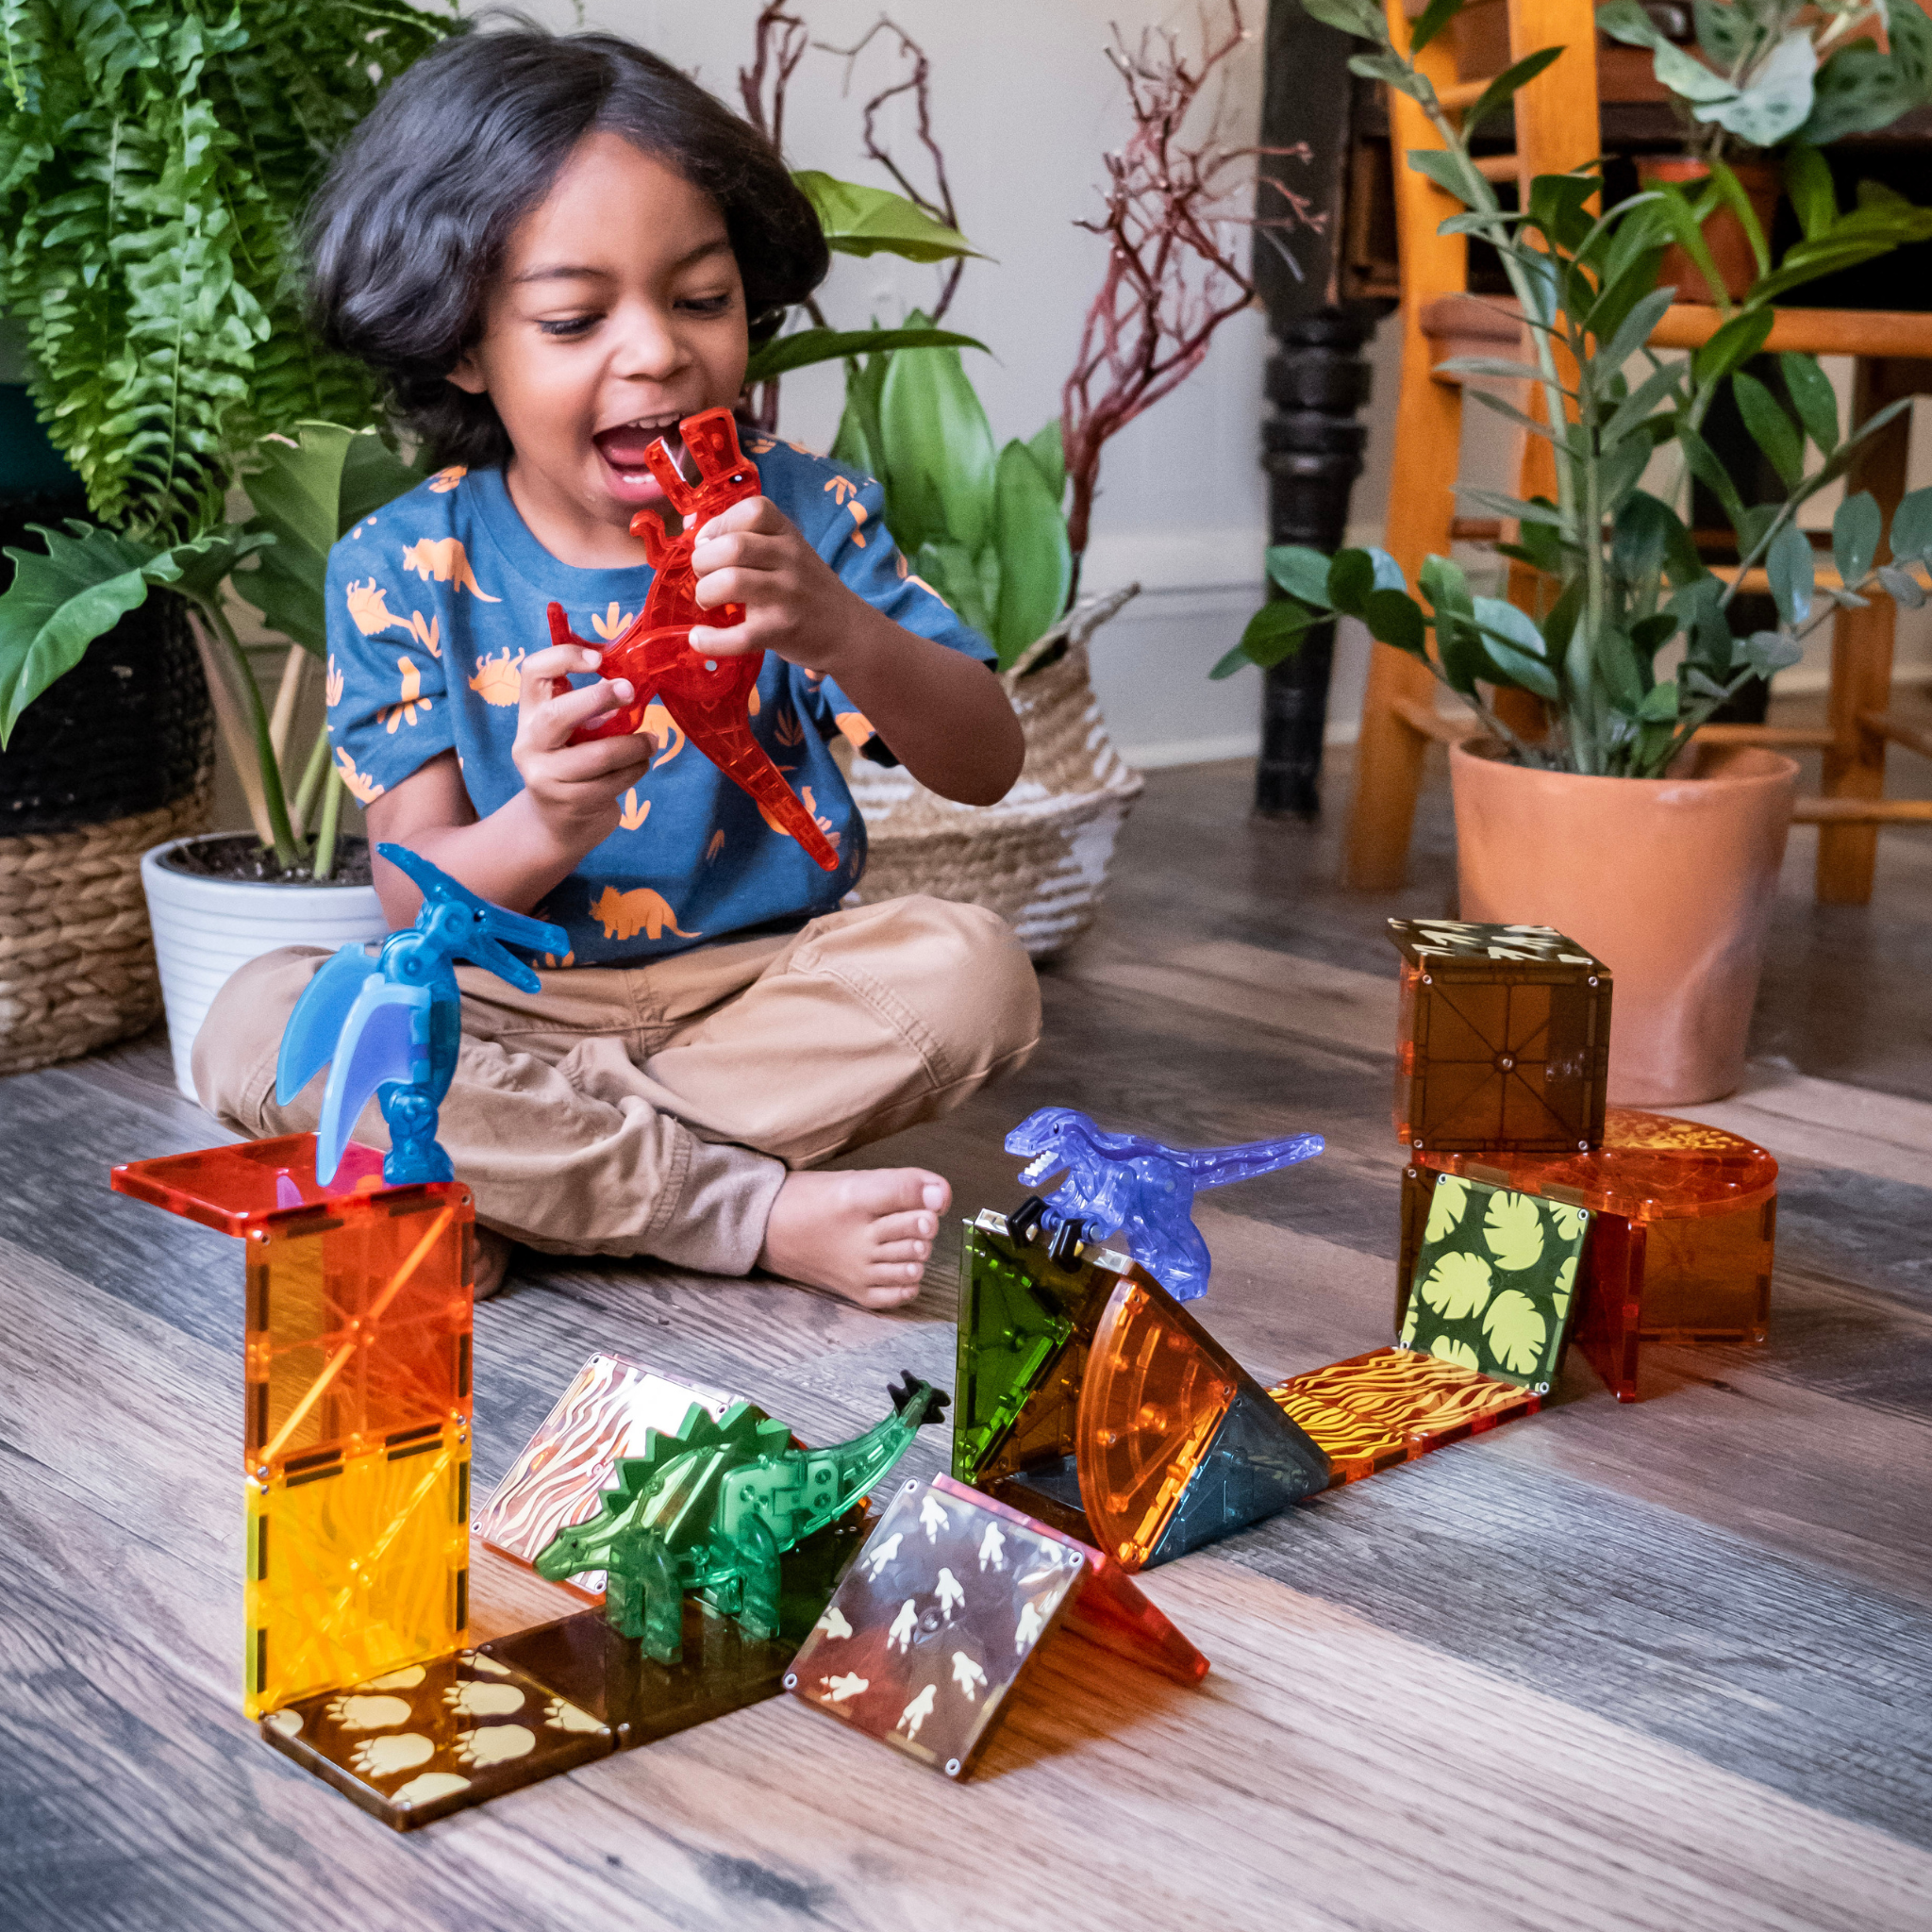 Magna Tiles Dino World – HUZZAH! Toys